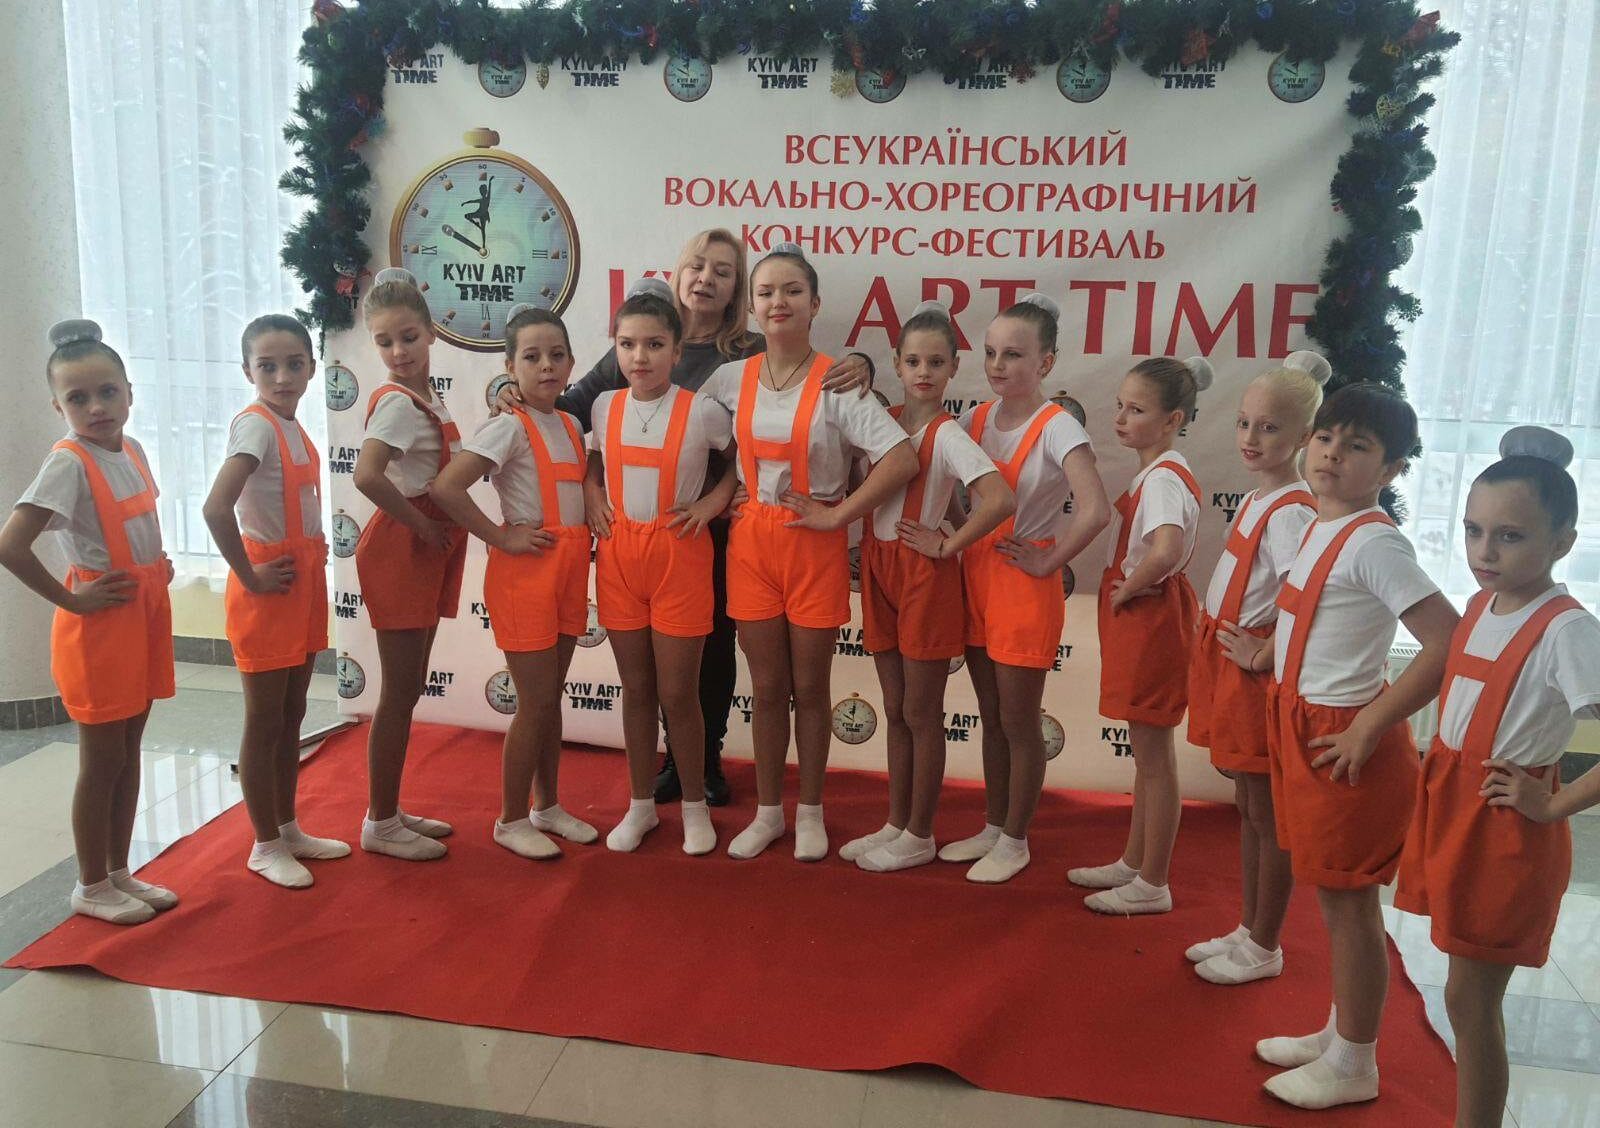 Choreographic teams “Inspiration” and “Kapitoshka” at a national Ukrainian vocal and choreographic contest